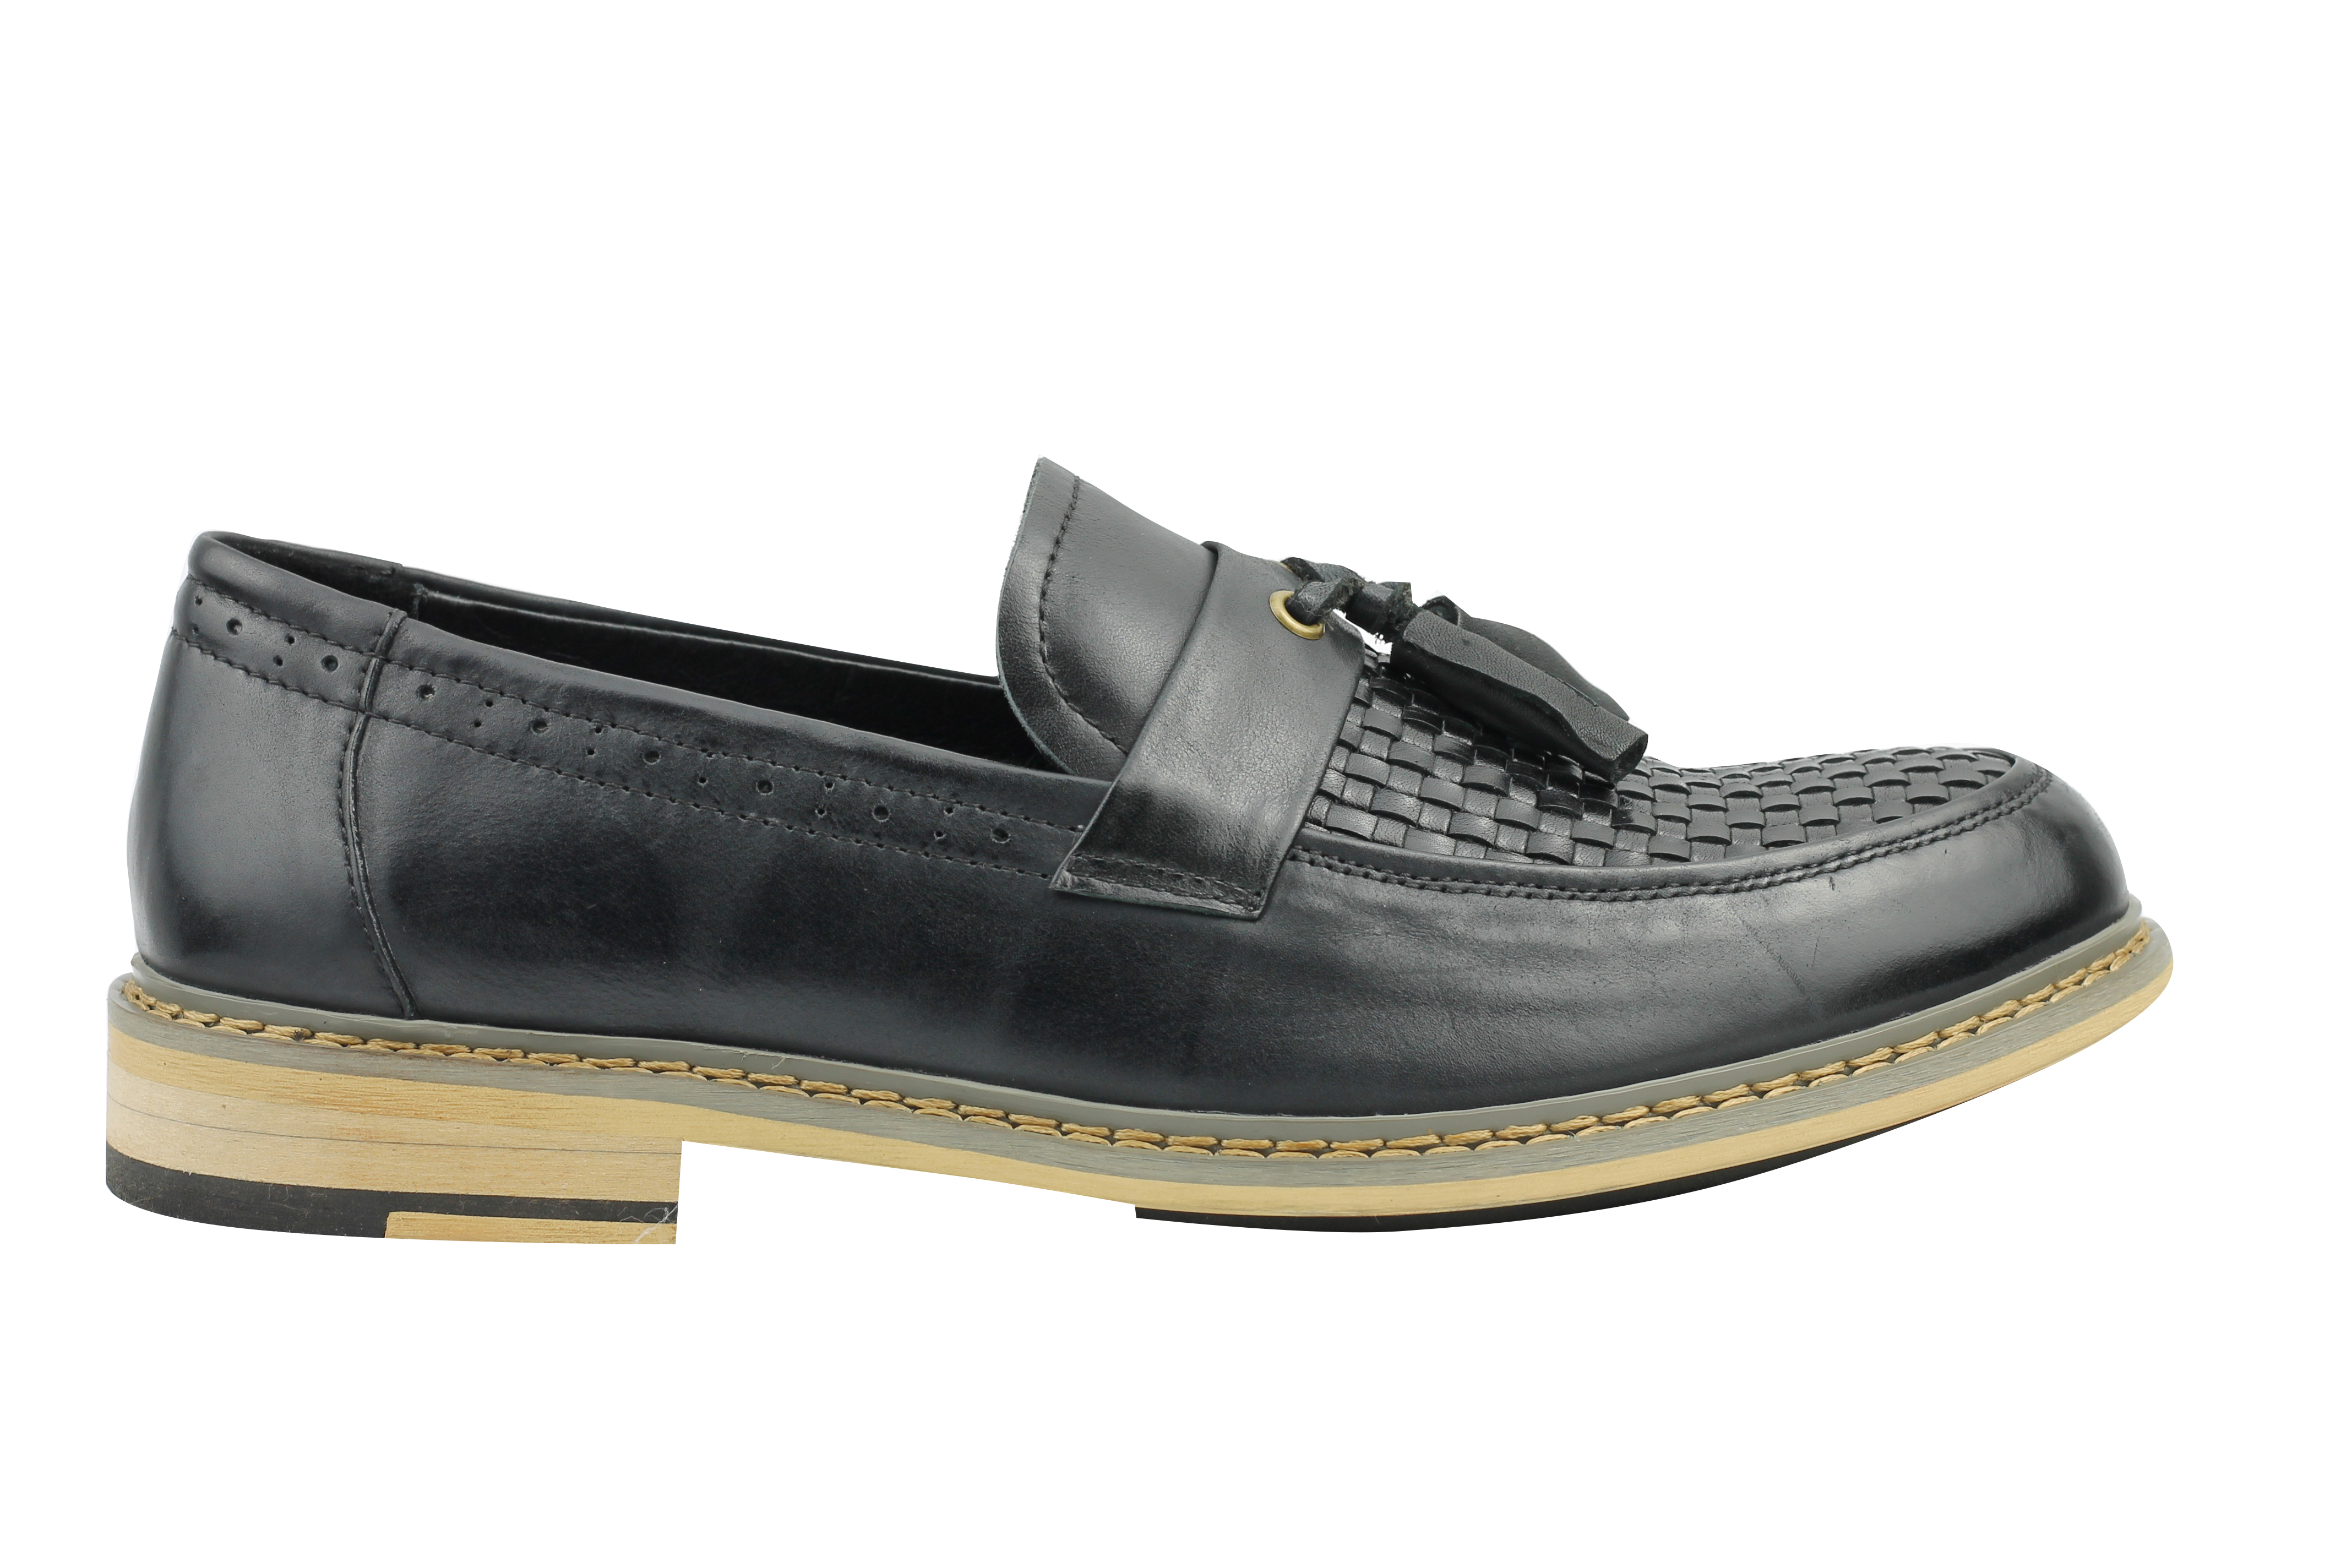 Mens Black Tan Woven Real Leather Tassel Loafers Smart MOD Vintage Driving Shoes | eBay